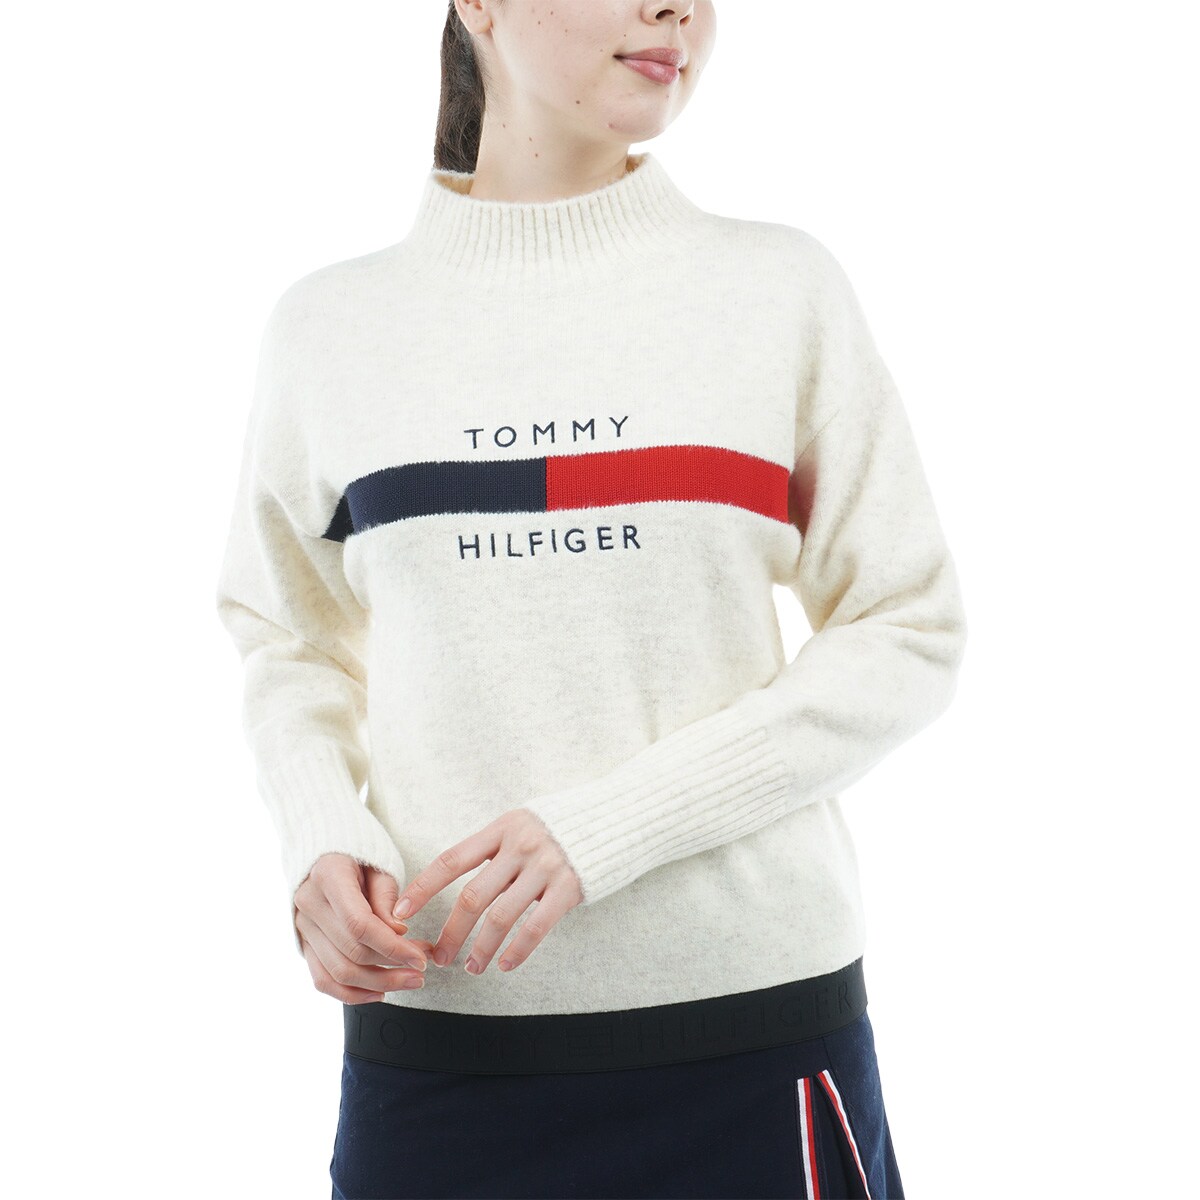 WOMEN FASHION Jumpers & Sweatshirts Hoodie Green M Tommy Hilfiger sweatshirt discount 53% 